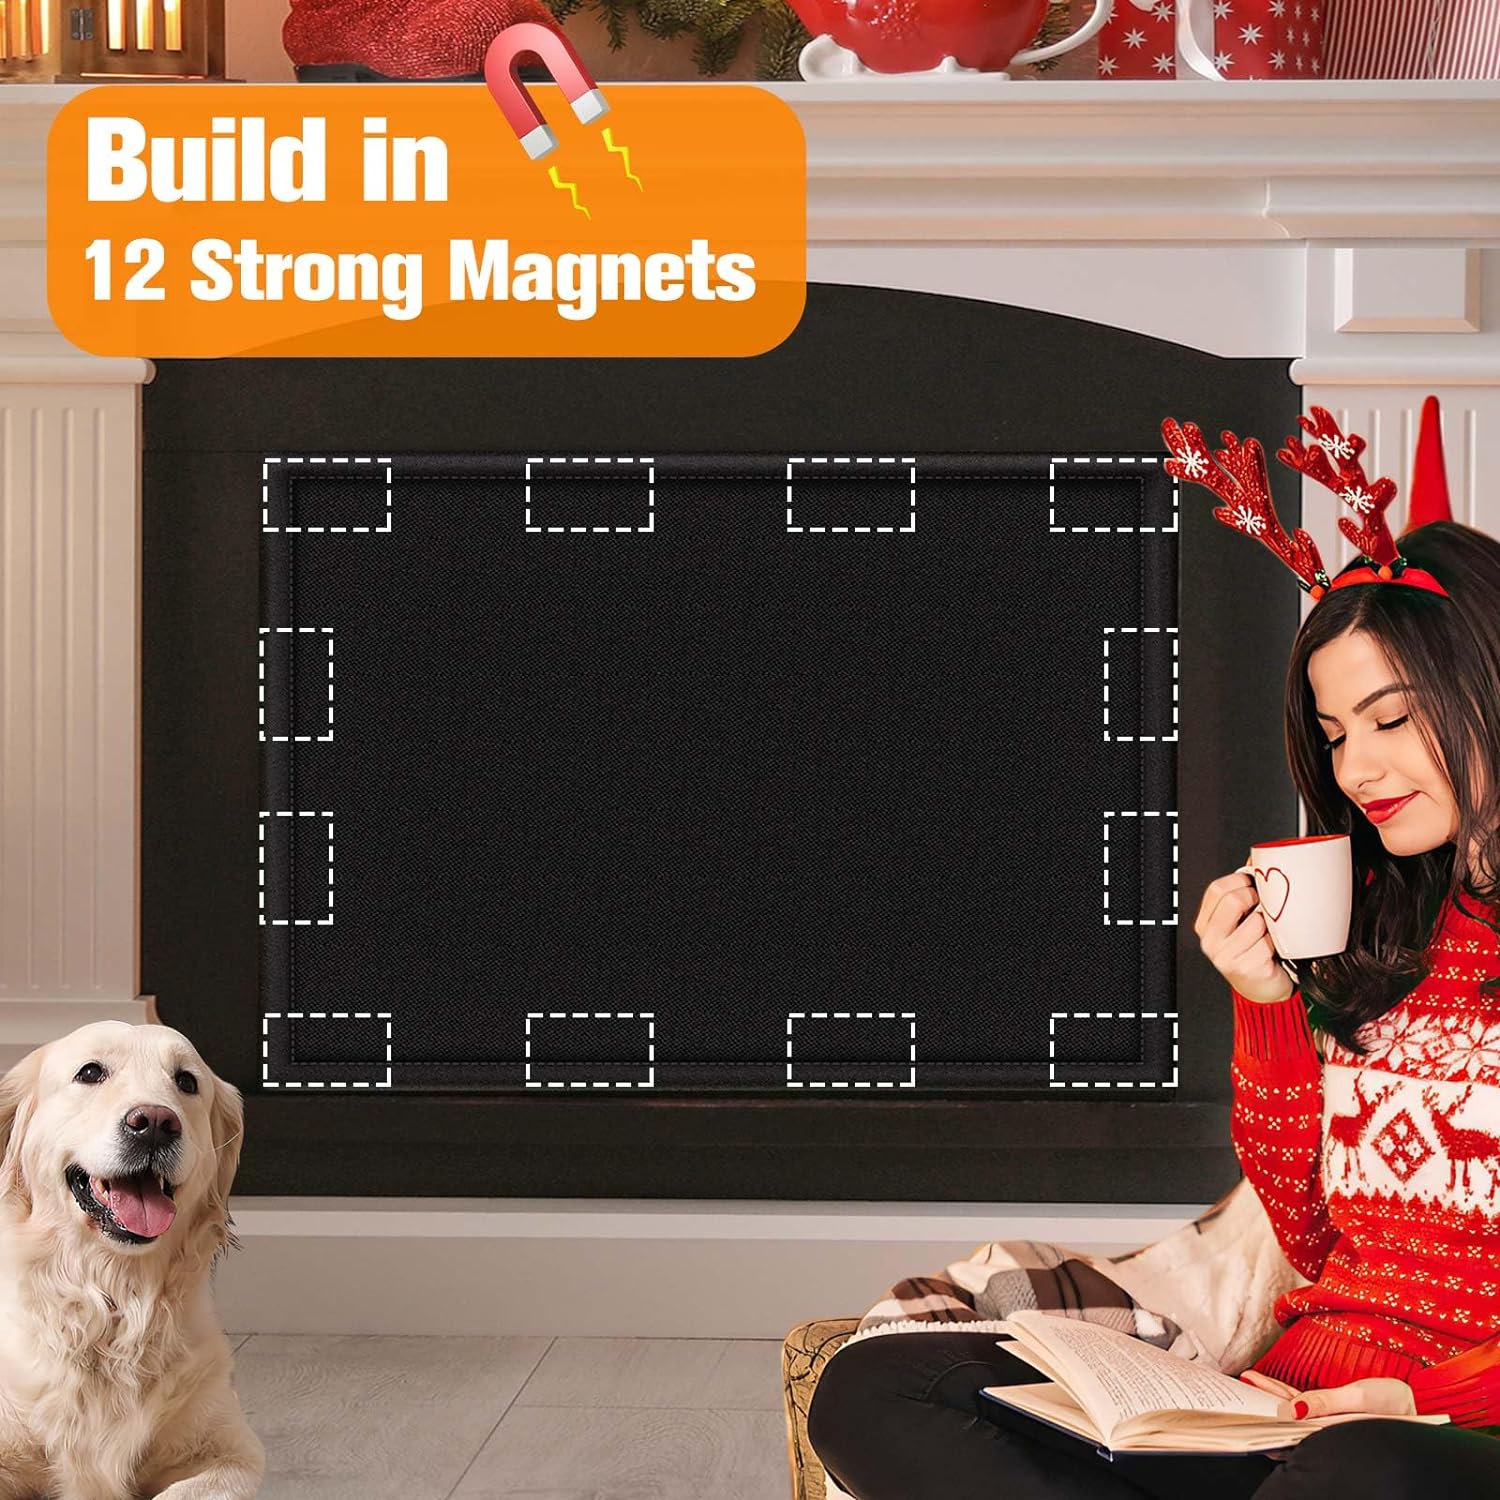 Black 39 W x 32 H Magnetic Adjustable Fireplace Cover Blocker Blanke –  GrillPartsReplacement - Online BBQ Parts Retailer